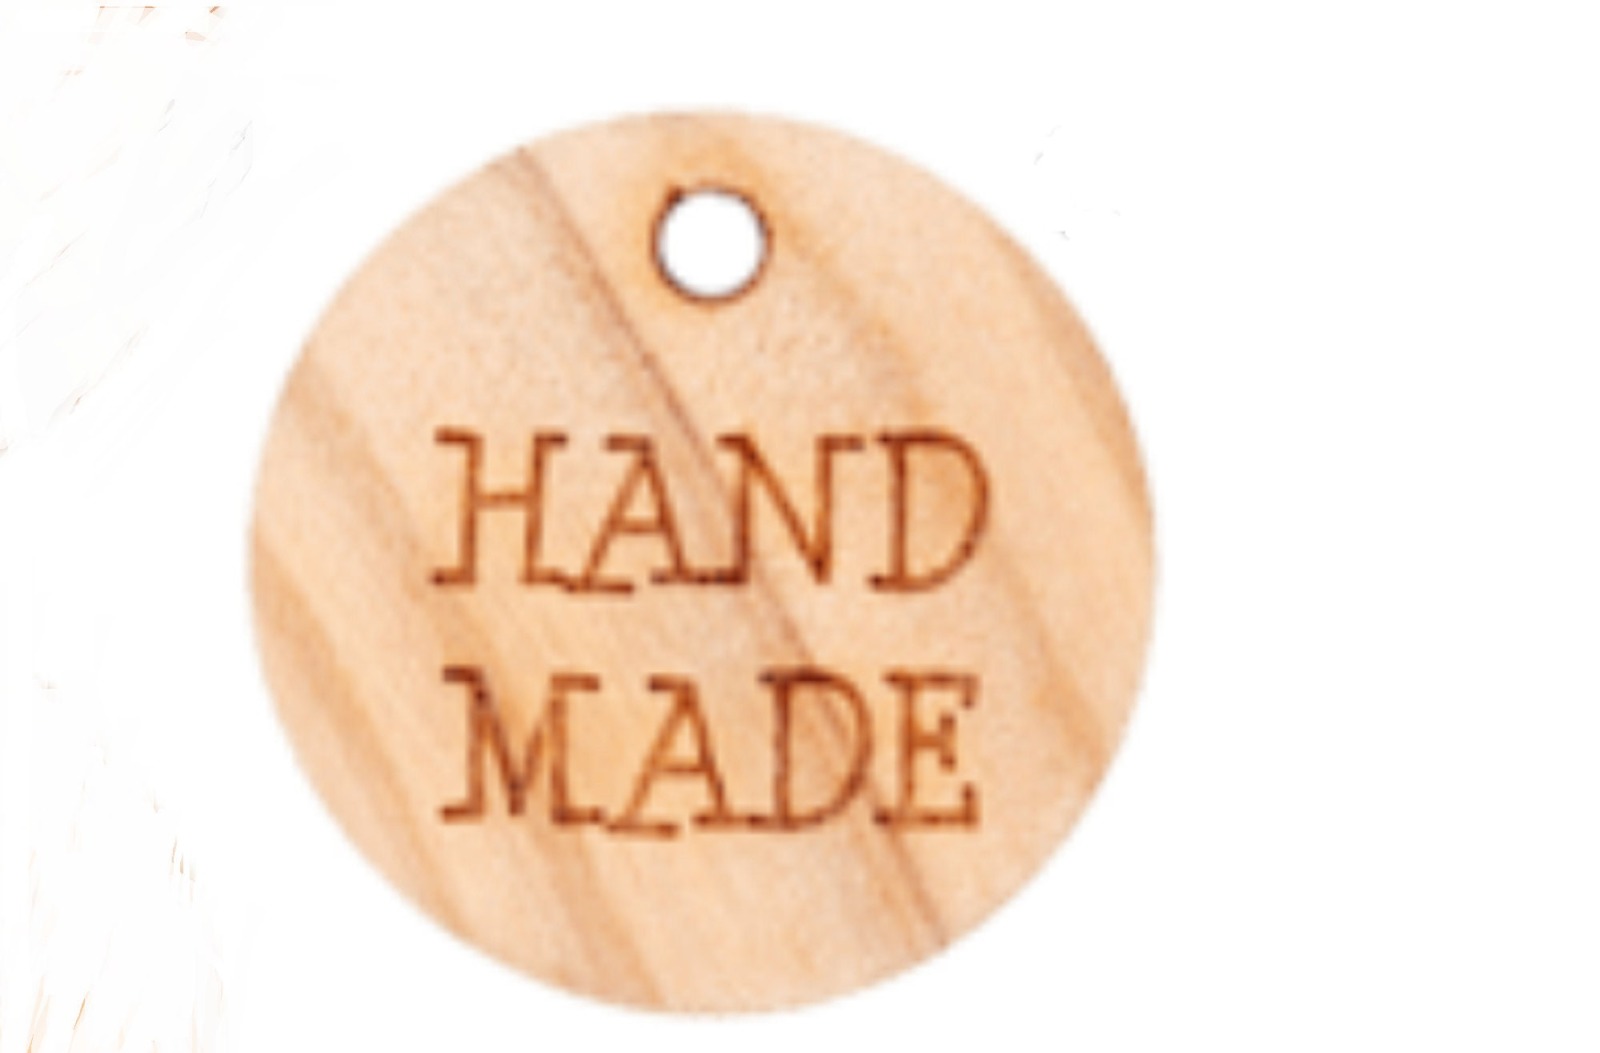 Creative Label 18 mm Handmade Holz | 5 Stück